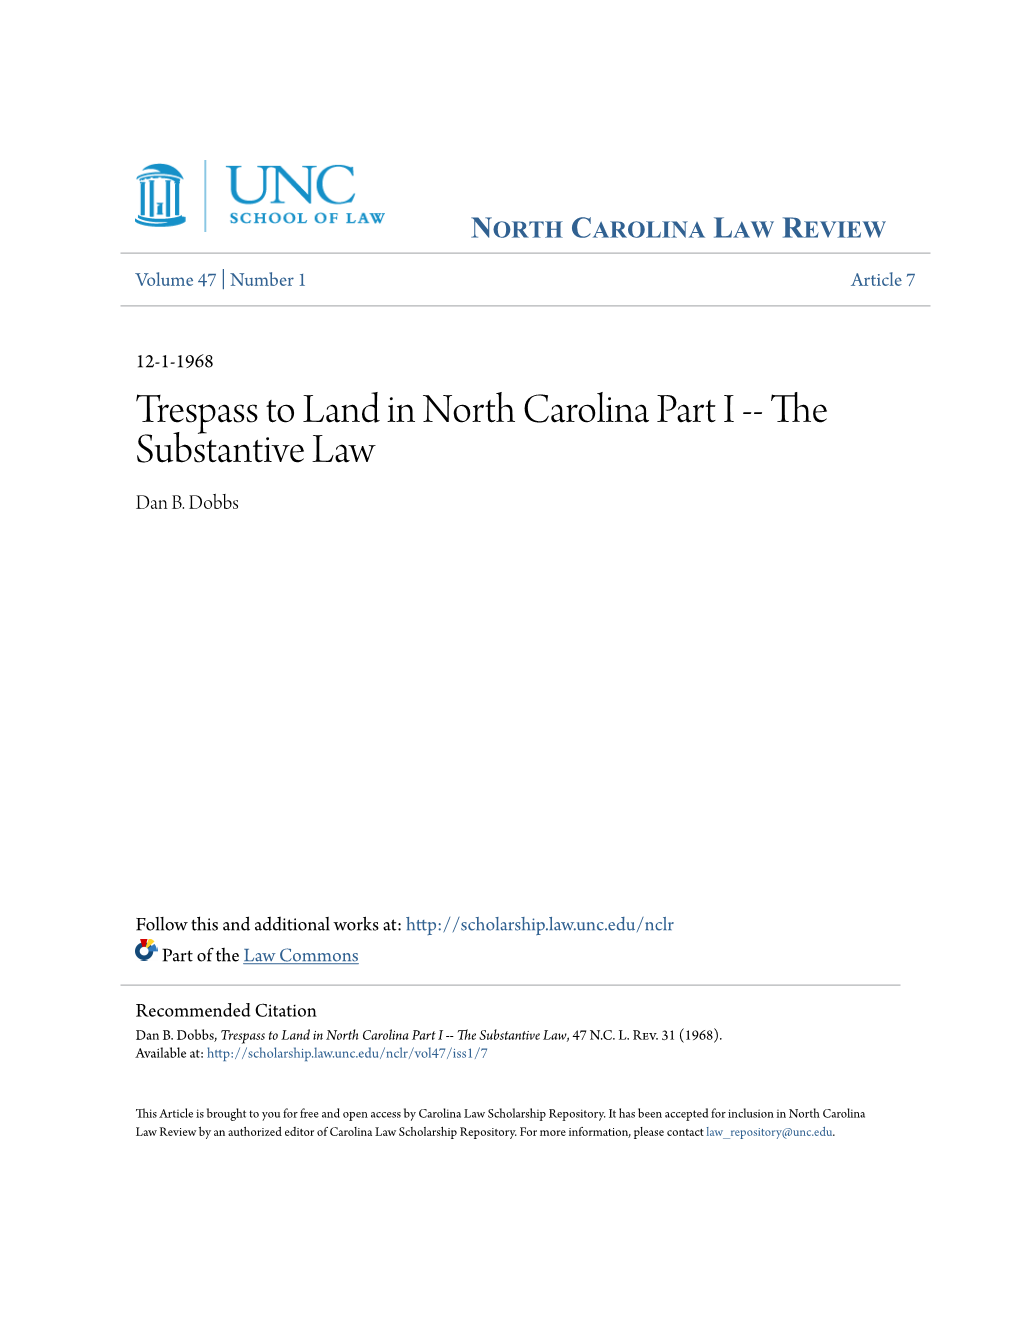 Trespass to Land in North Carolina Part I -- the Substantive Law Dan B